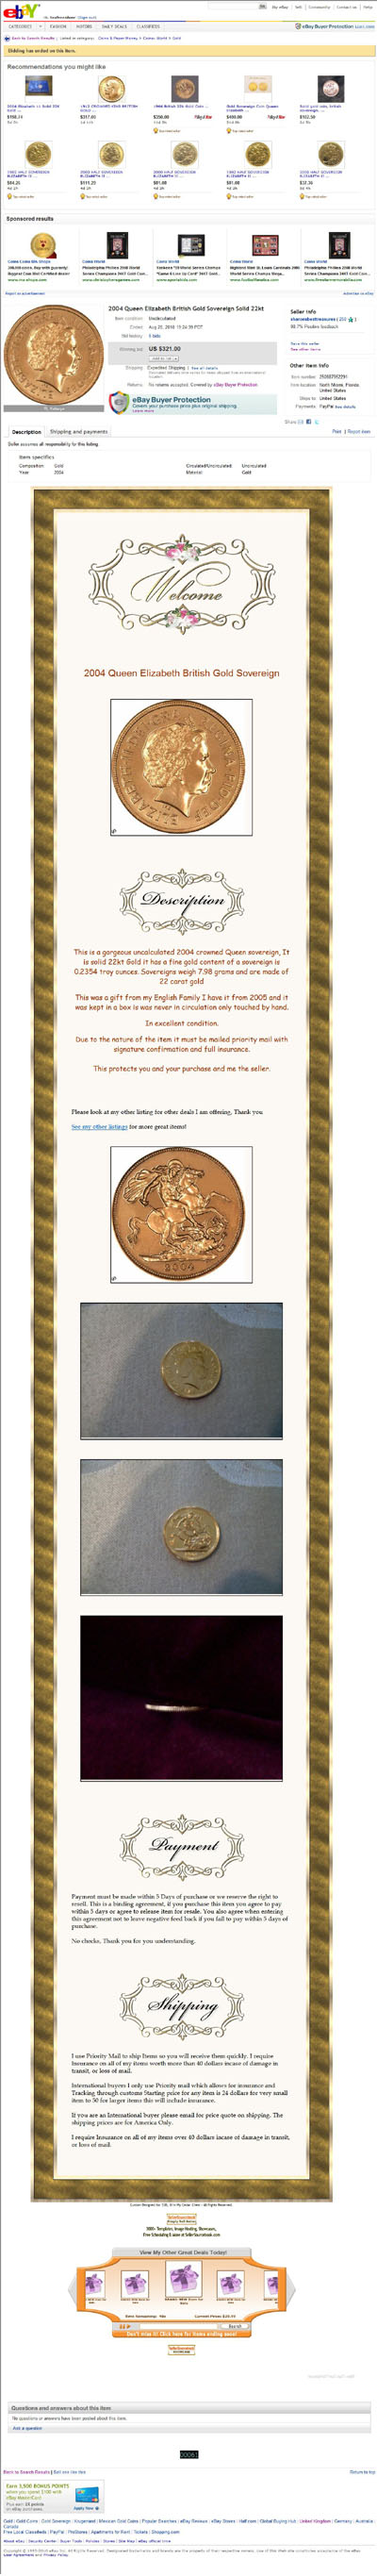 sharonsbesttreasures 2004 Queen Elizabeth British Gold Sovereign Solid 22kt eBay Auction Listing